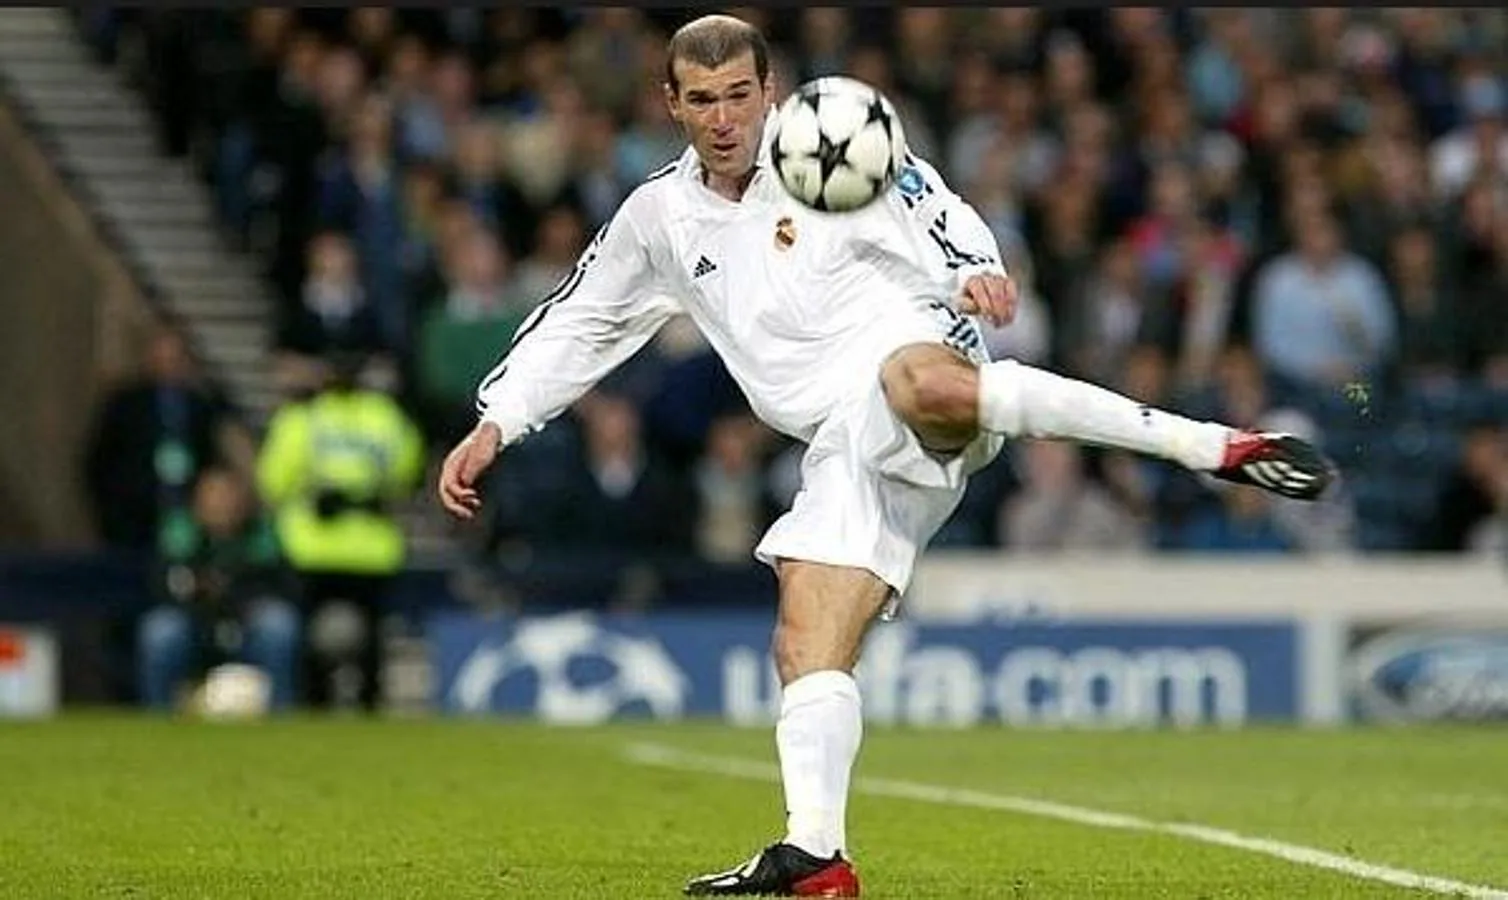 Zinedine Zidane (Real Madrid). 